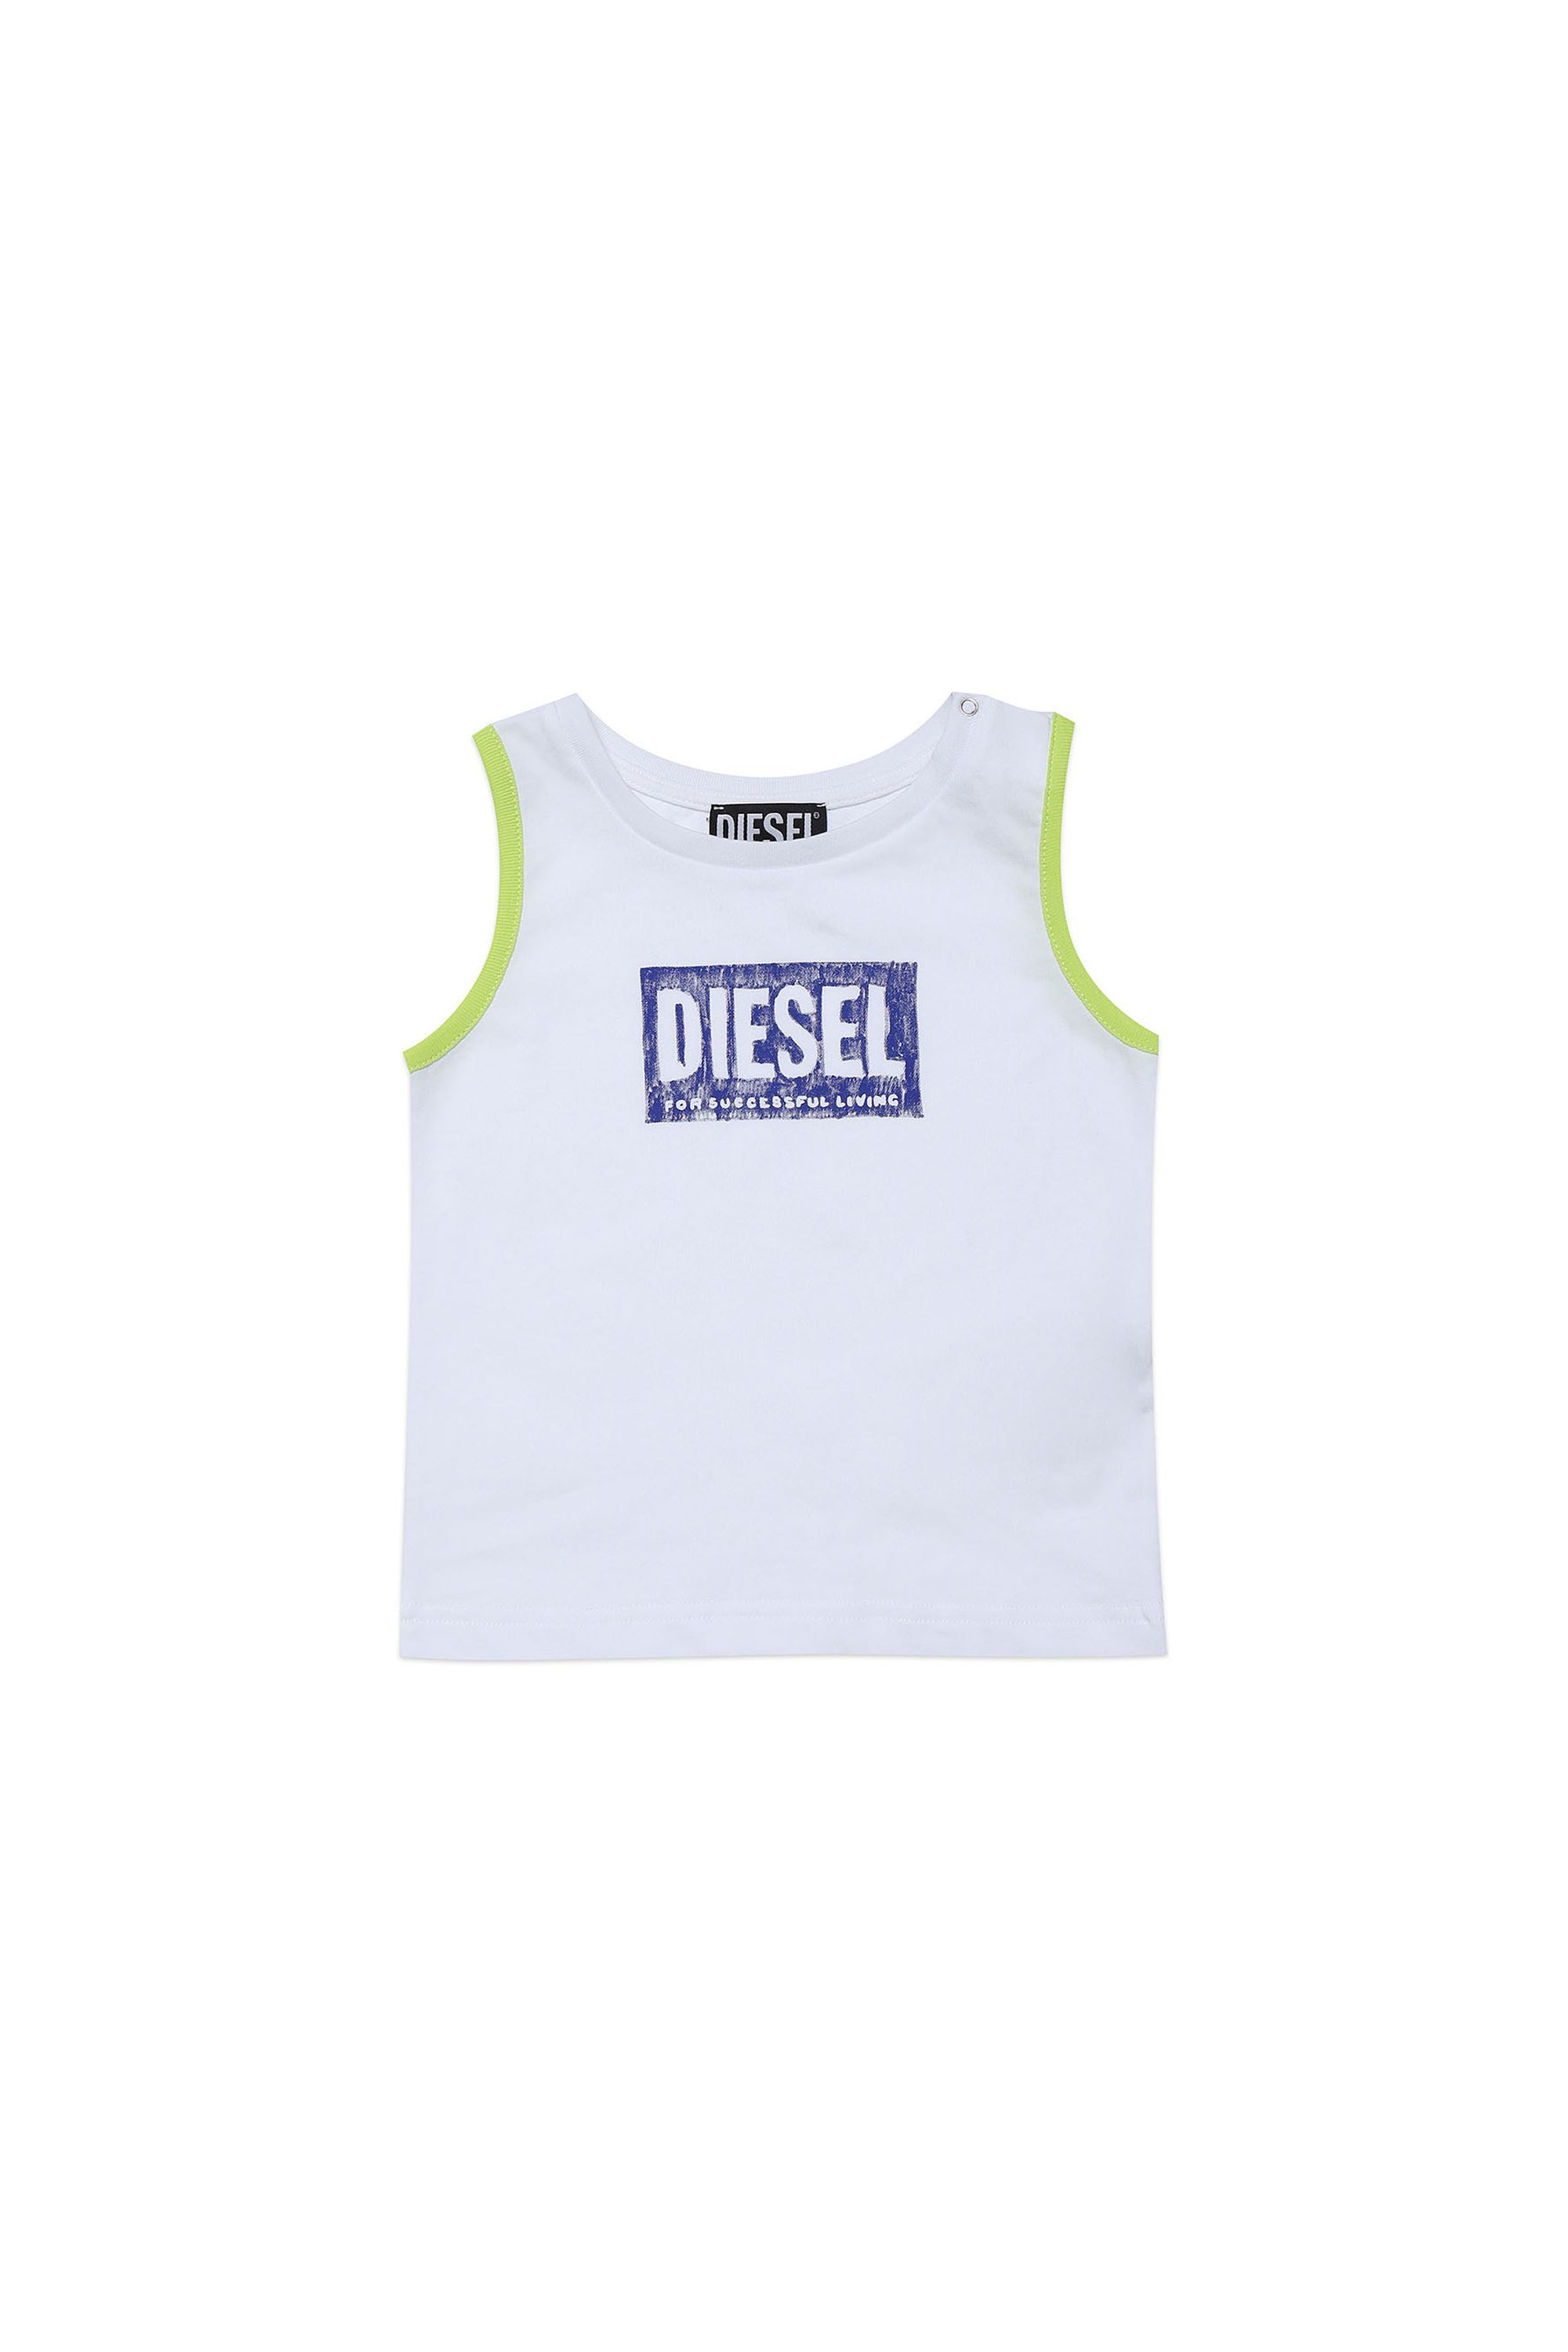 Diesel - MTURLOB, White - Image 1